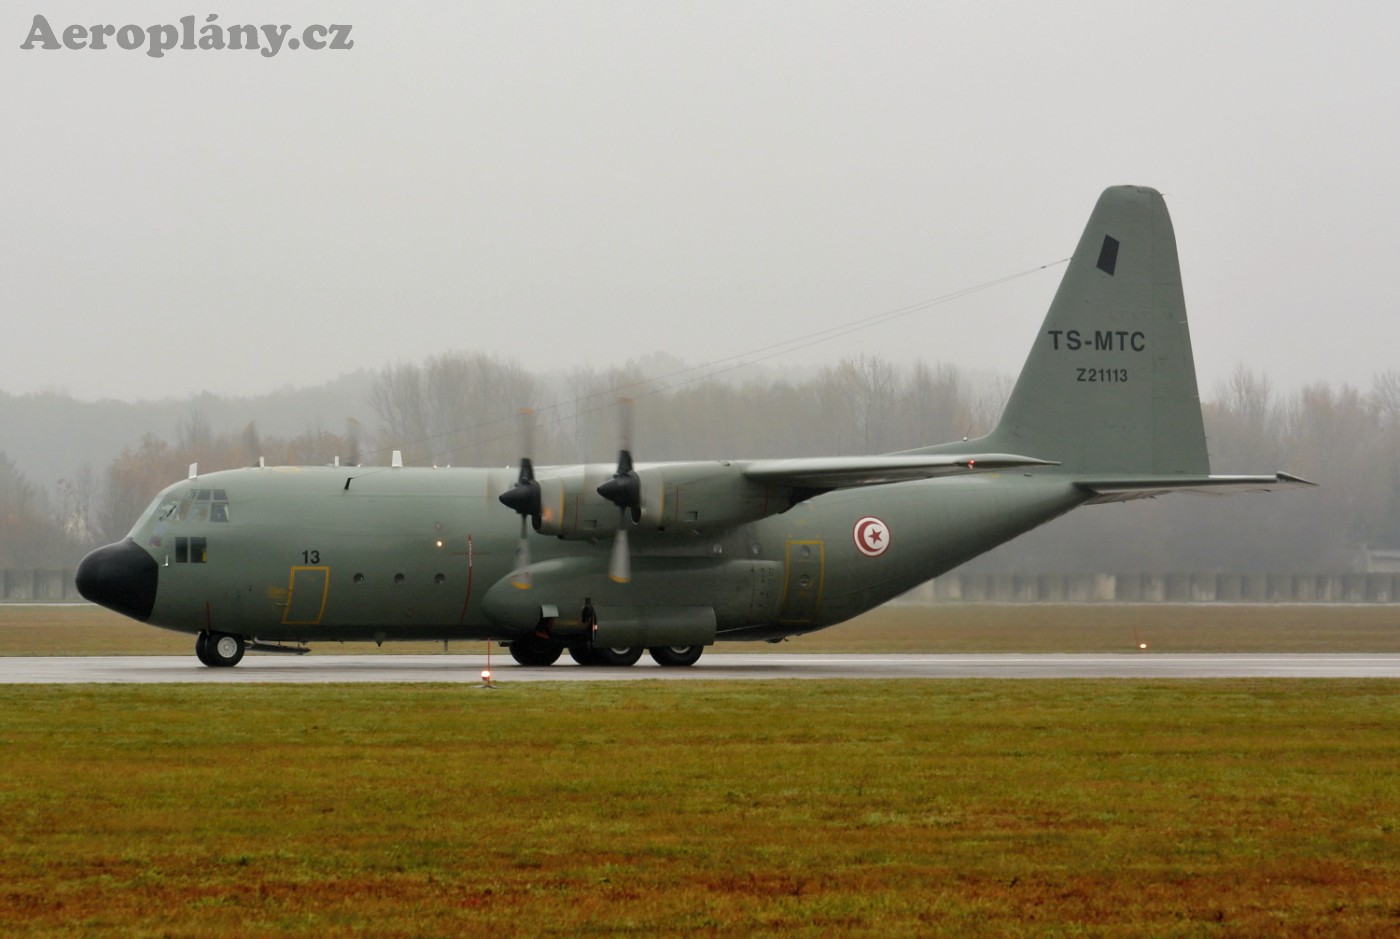 Lockheed C-130B Hercules - TS-MTC/Z21113